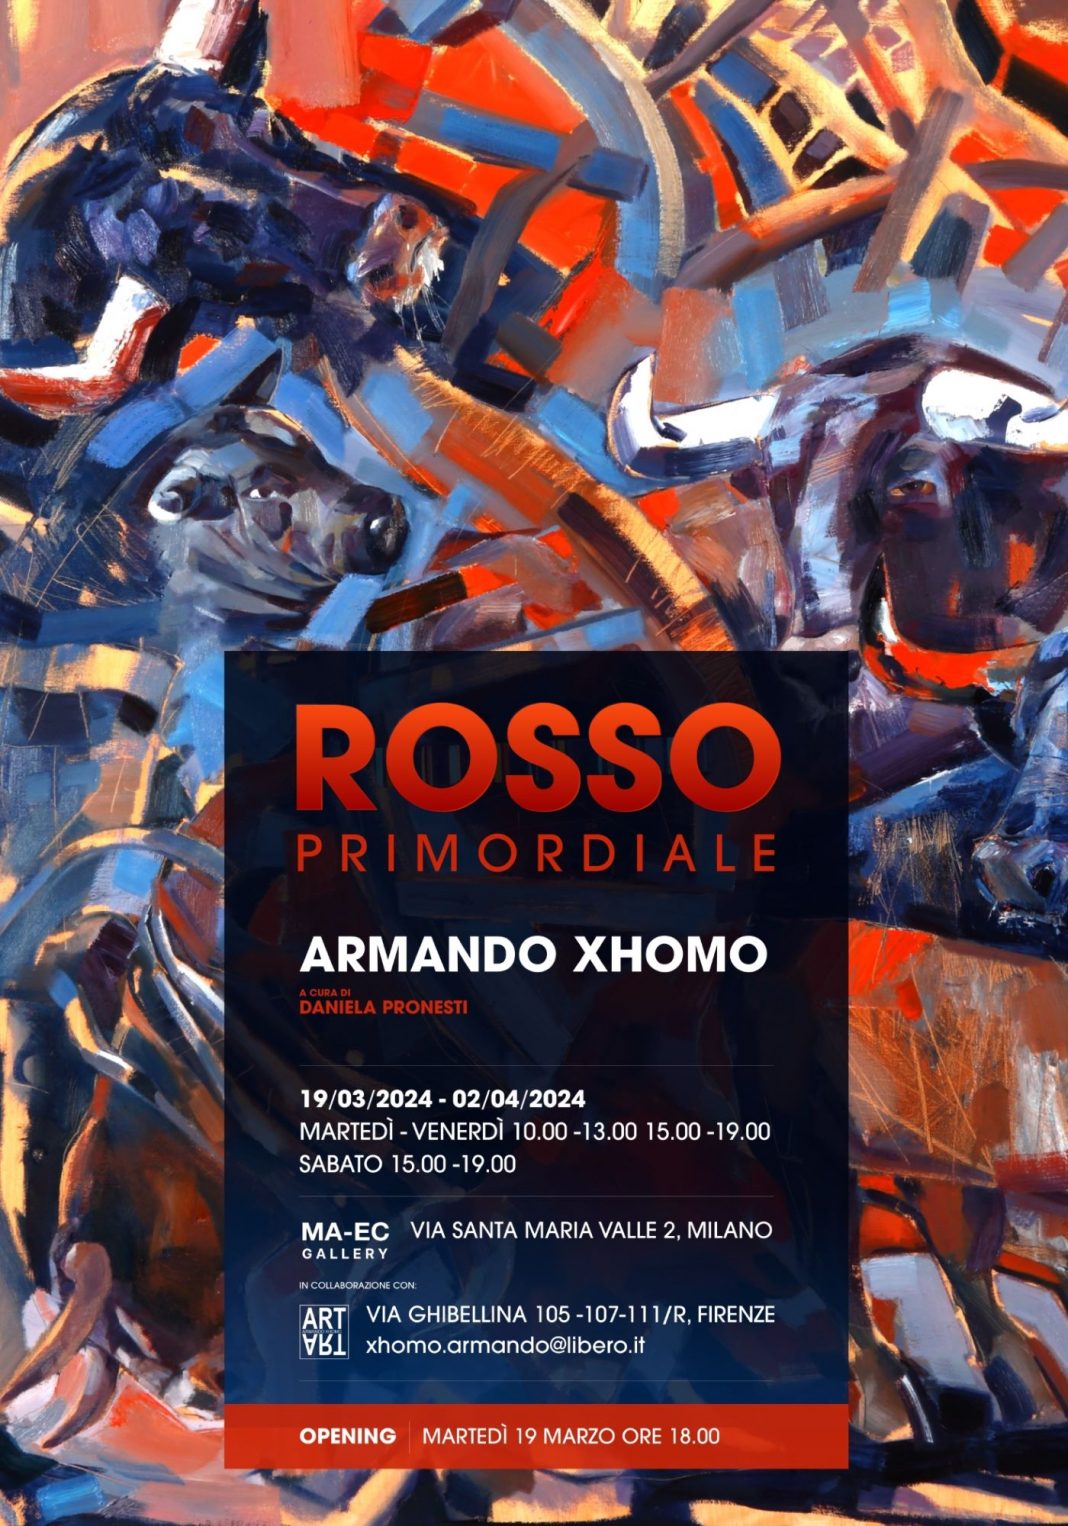 Armando Xhomo – Rosso primordialehttps://www.exibart.com/repository/media/formidable/11/img/bd0/Mostra-Armando-Xhomo-Milano-2024-1068x1526.jpg